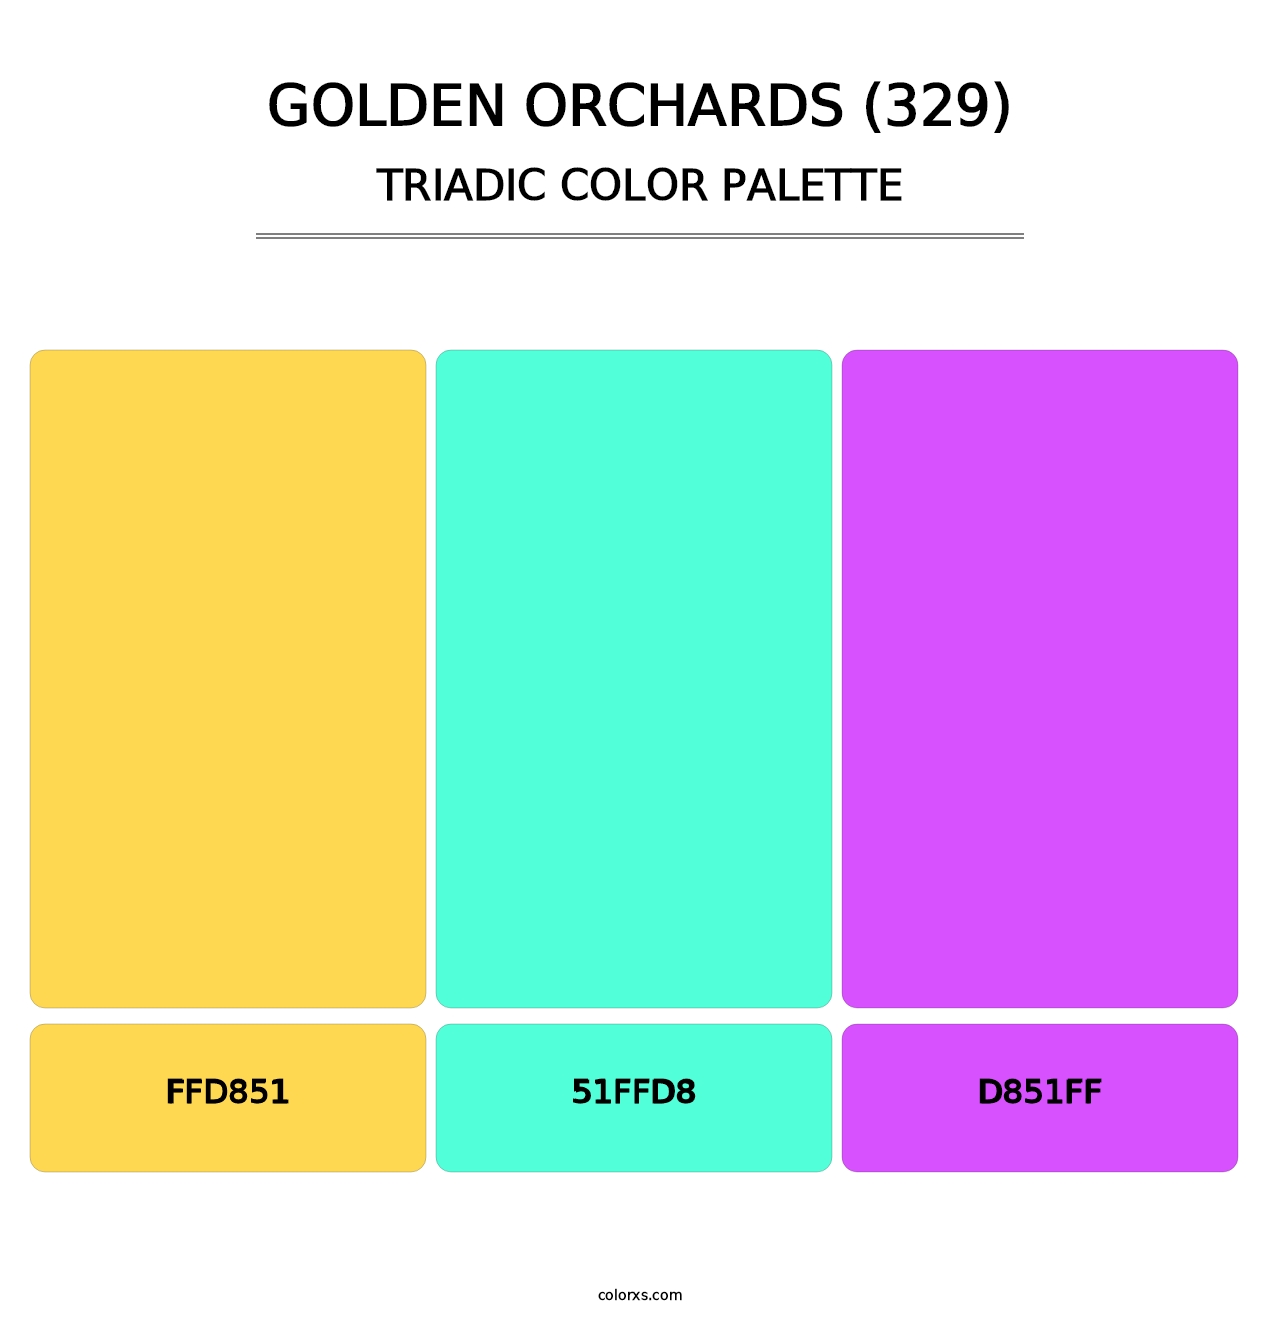 Golden Orchards (329) - Triadic Color Palette